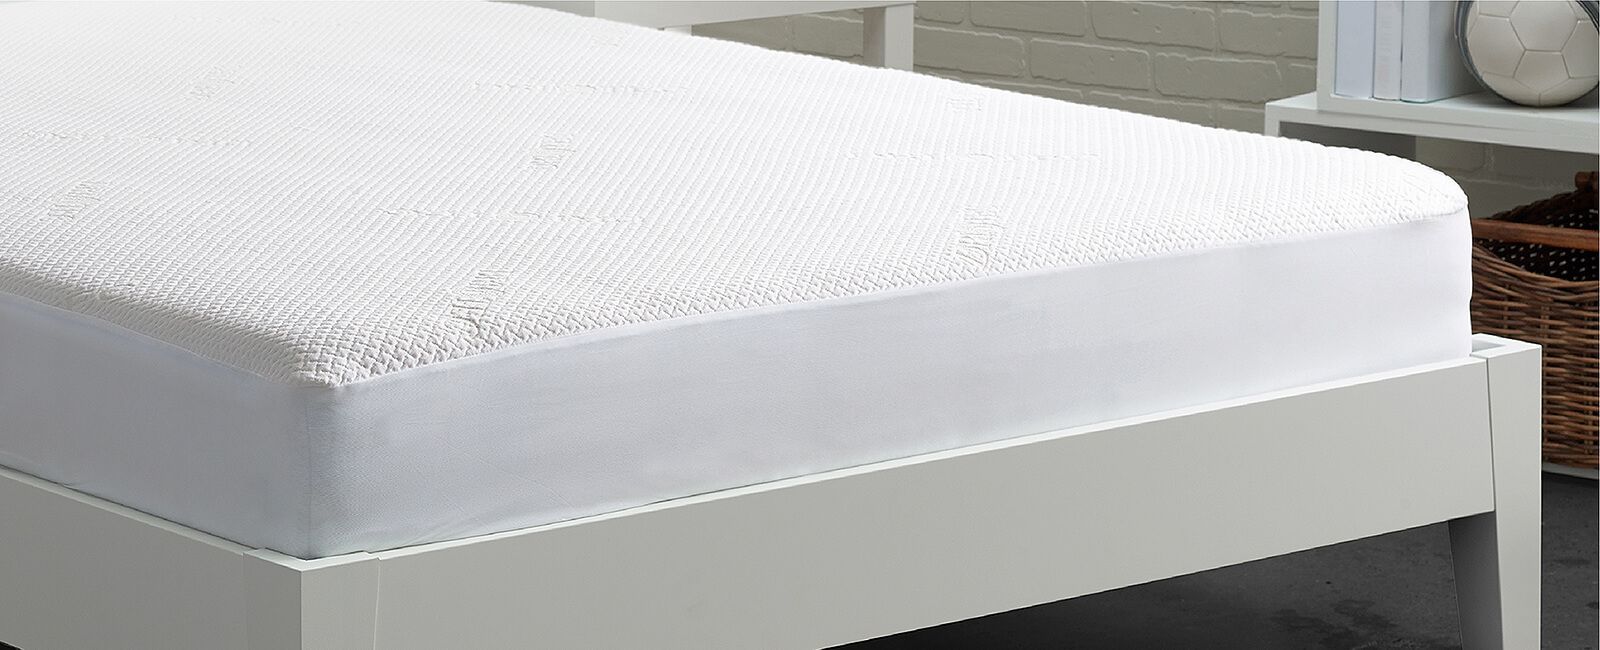 dri tec mattress protector cleaning